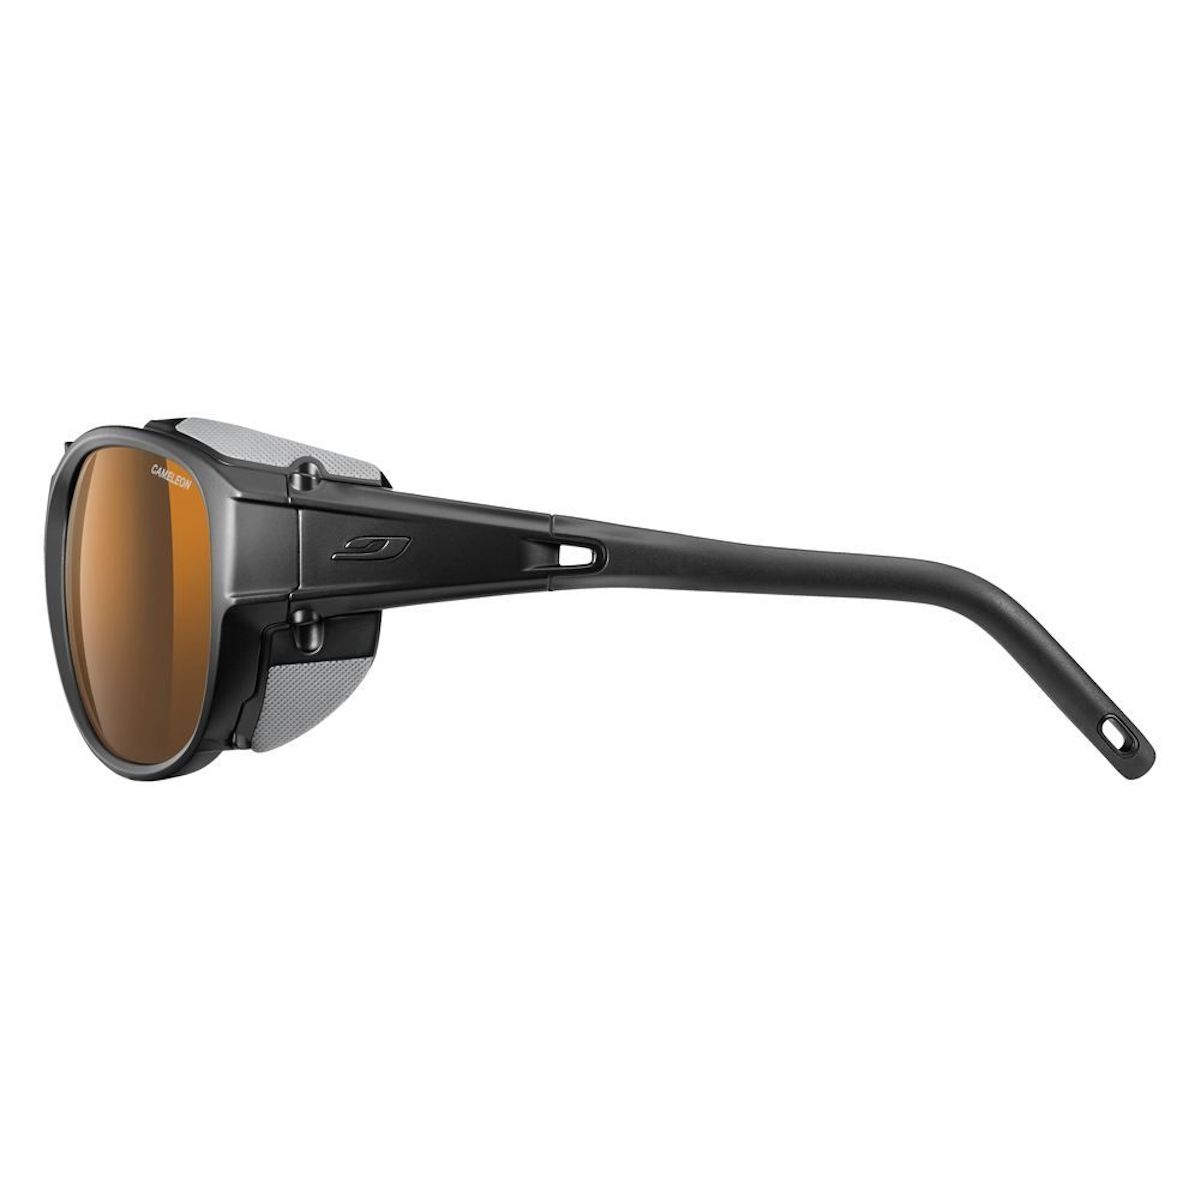 JULBO CHAM SILVER Frame Cable Temple Brown Lens Vintage Glacier Sunglasses  $225.99 - PicClick